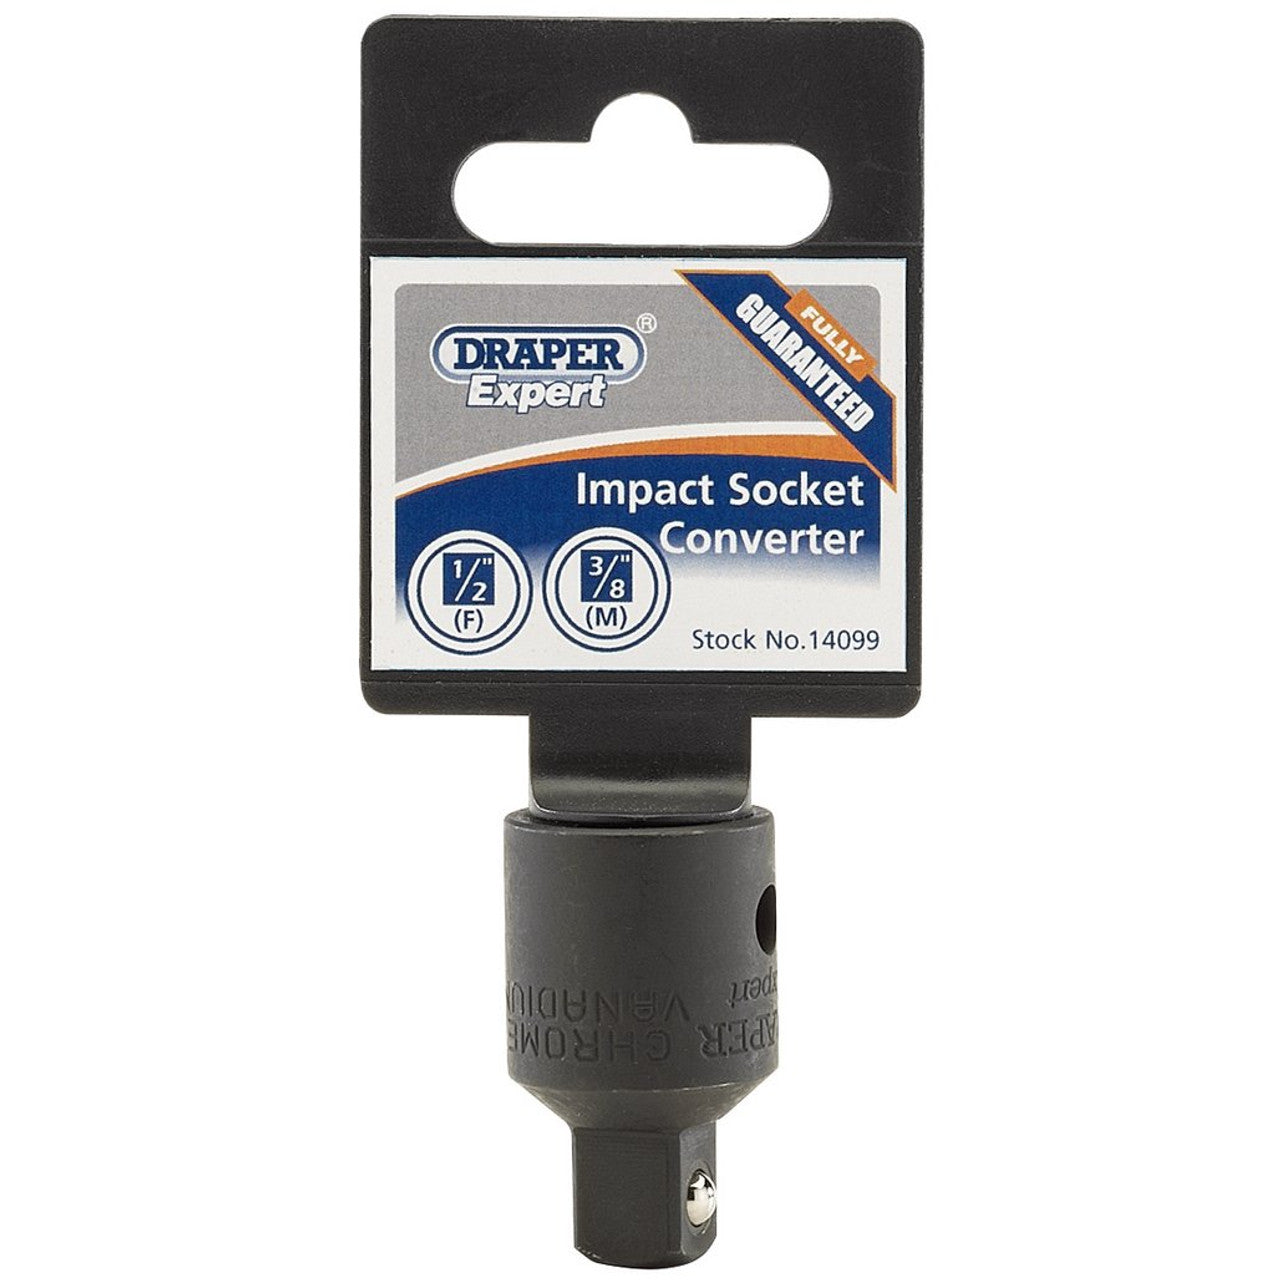 Draper 14099 1/2"(F) x 3/8"(M) Impact Socket Converter